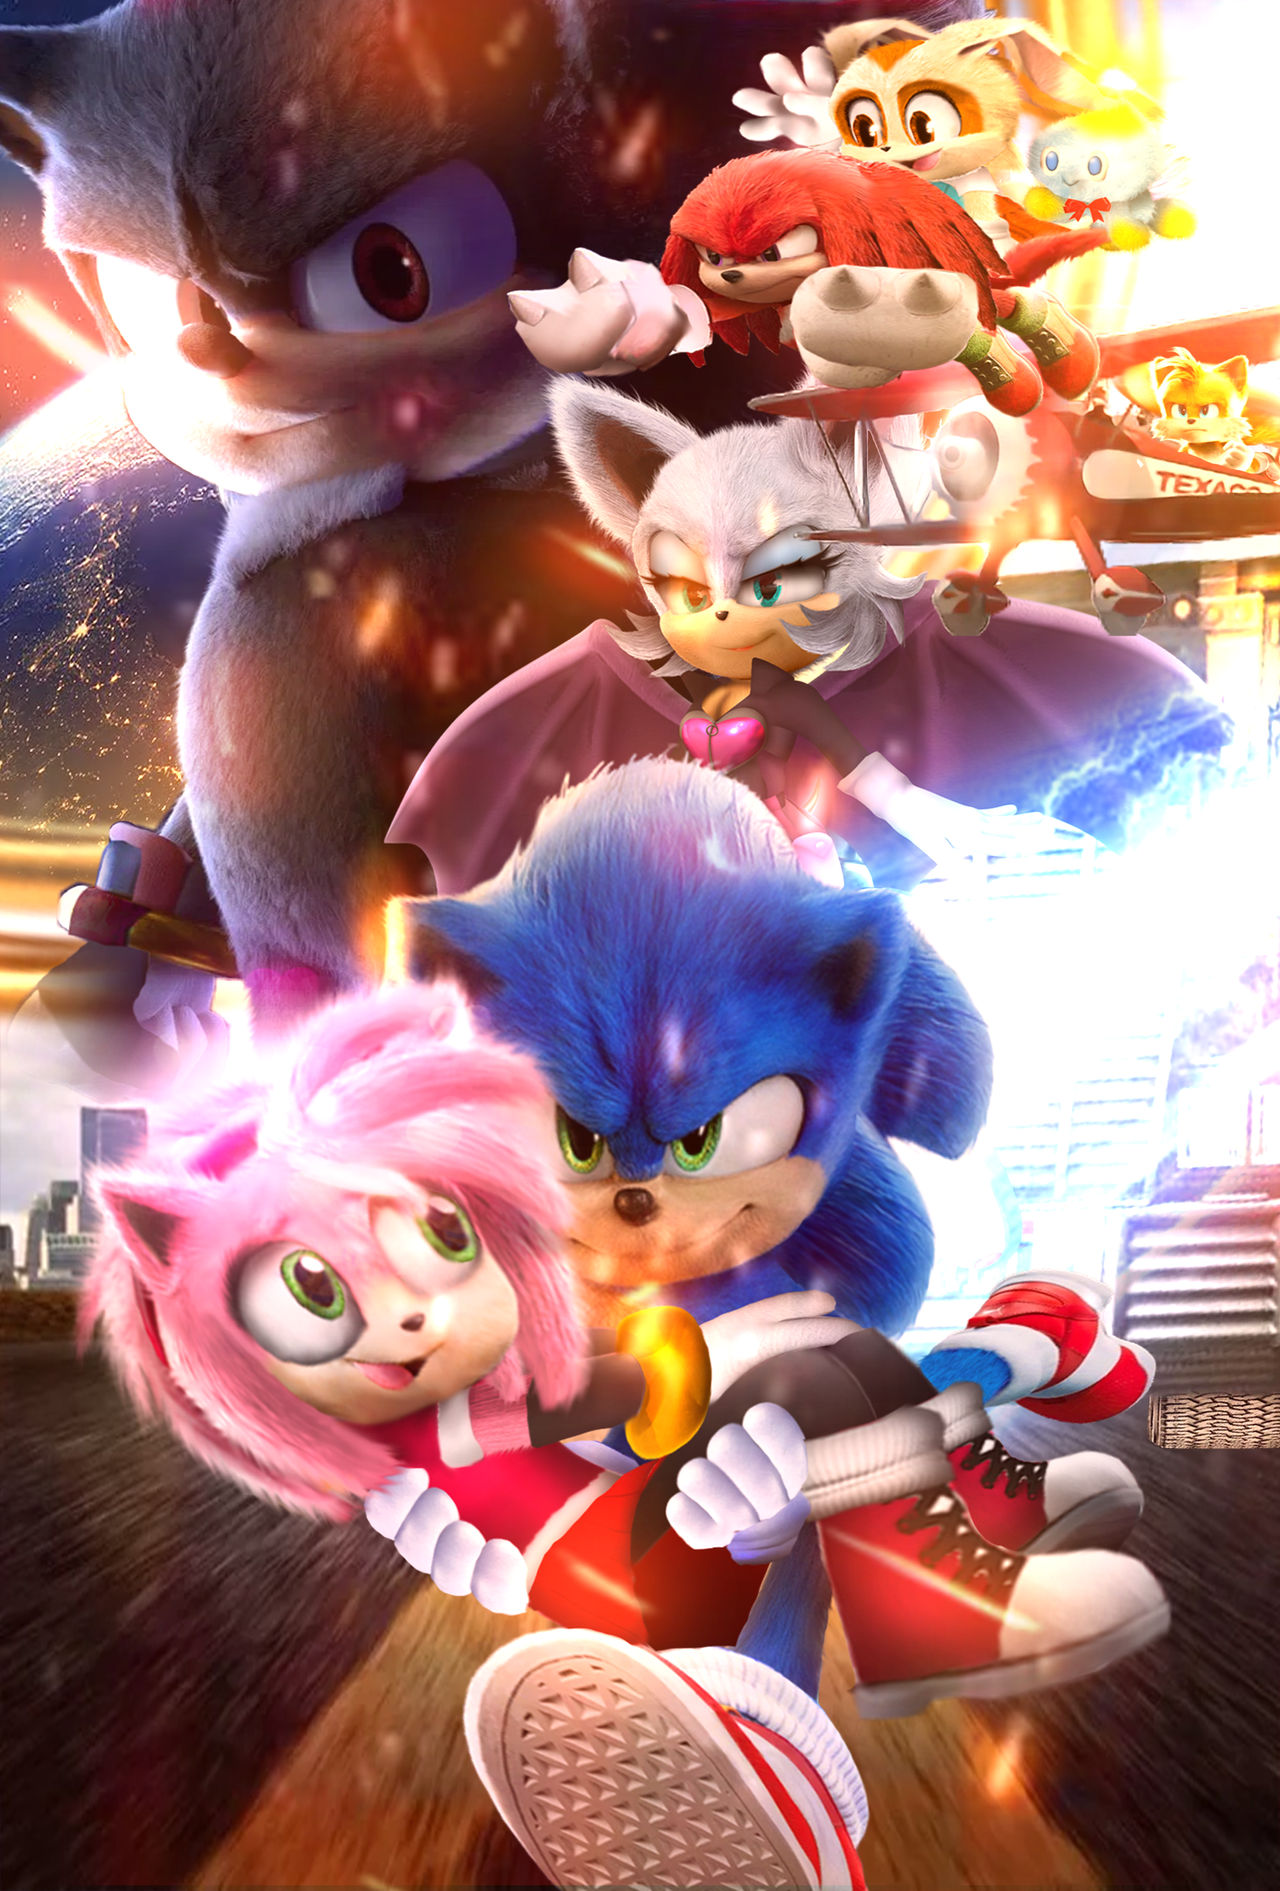 Sonic Prime Season 3 - Teaser Poster (Fanmade( by heybolol on DeviantArt